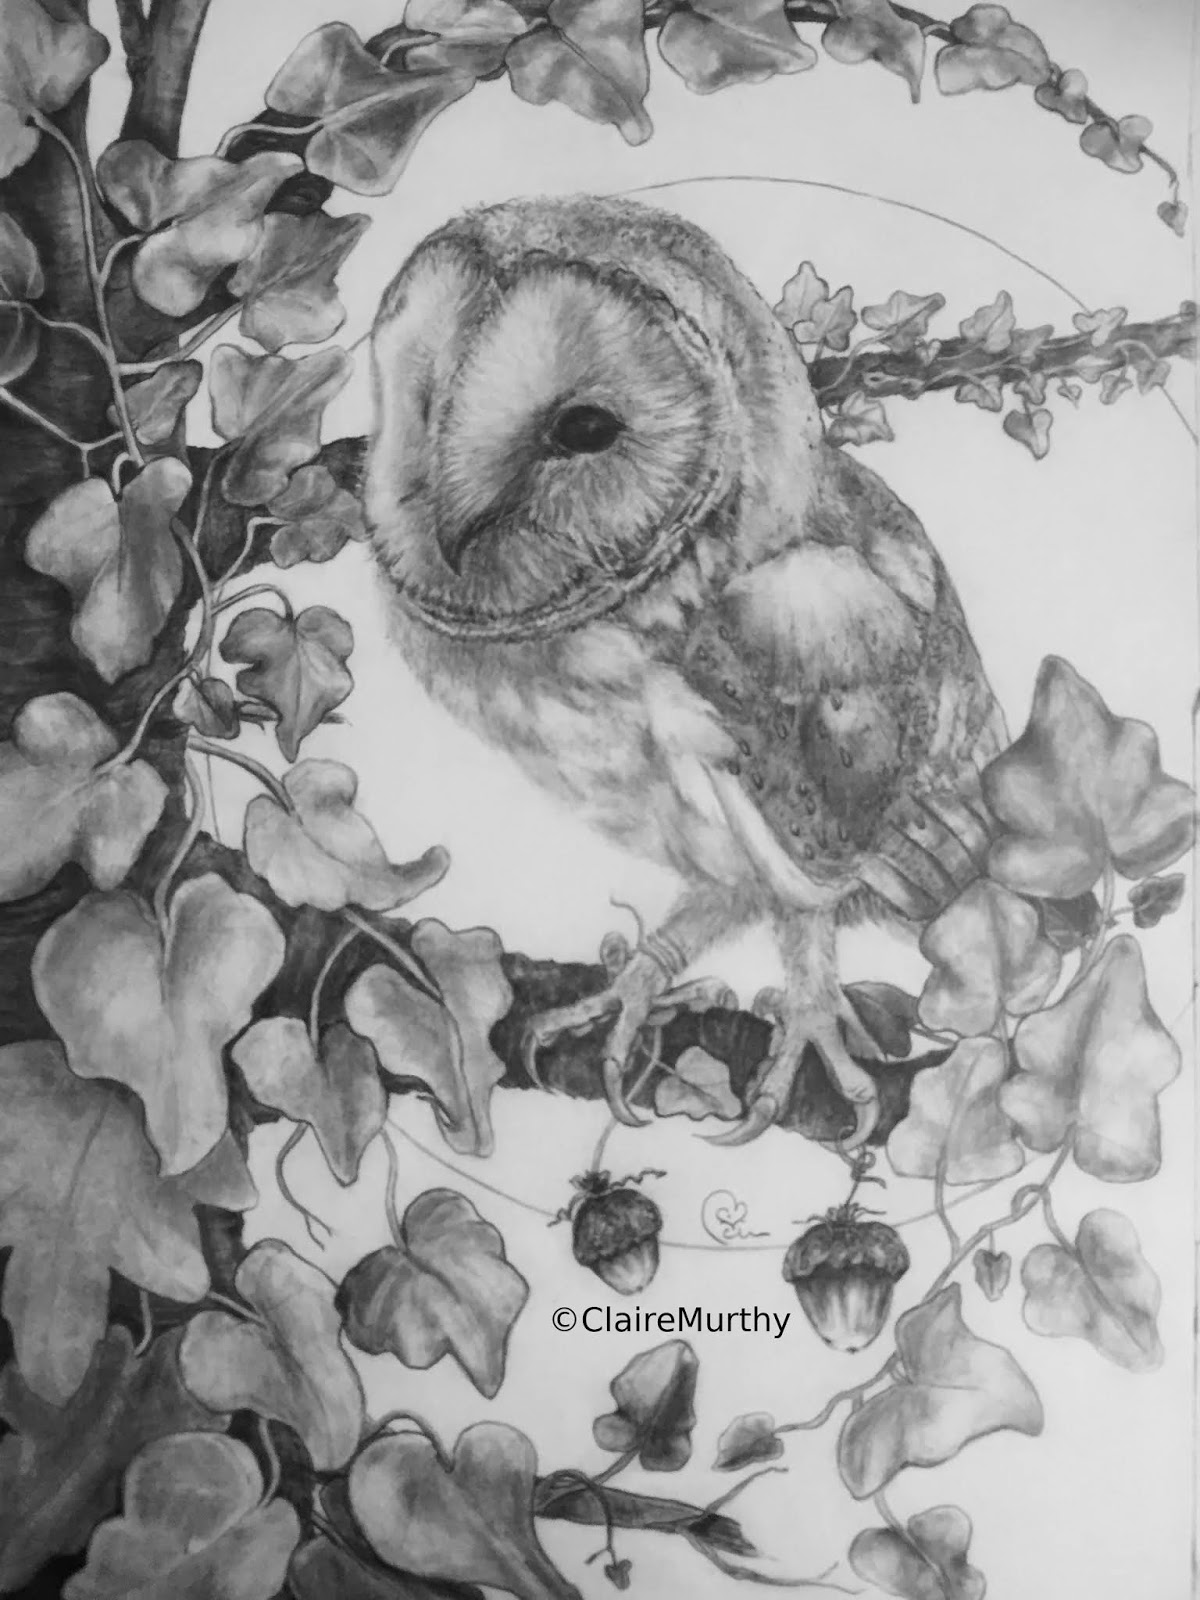 Wildlife Sketch: Sketching a Barn Owl